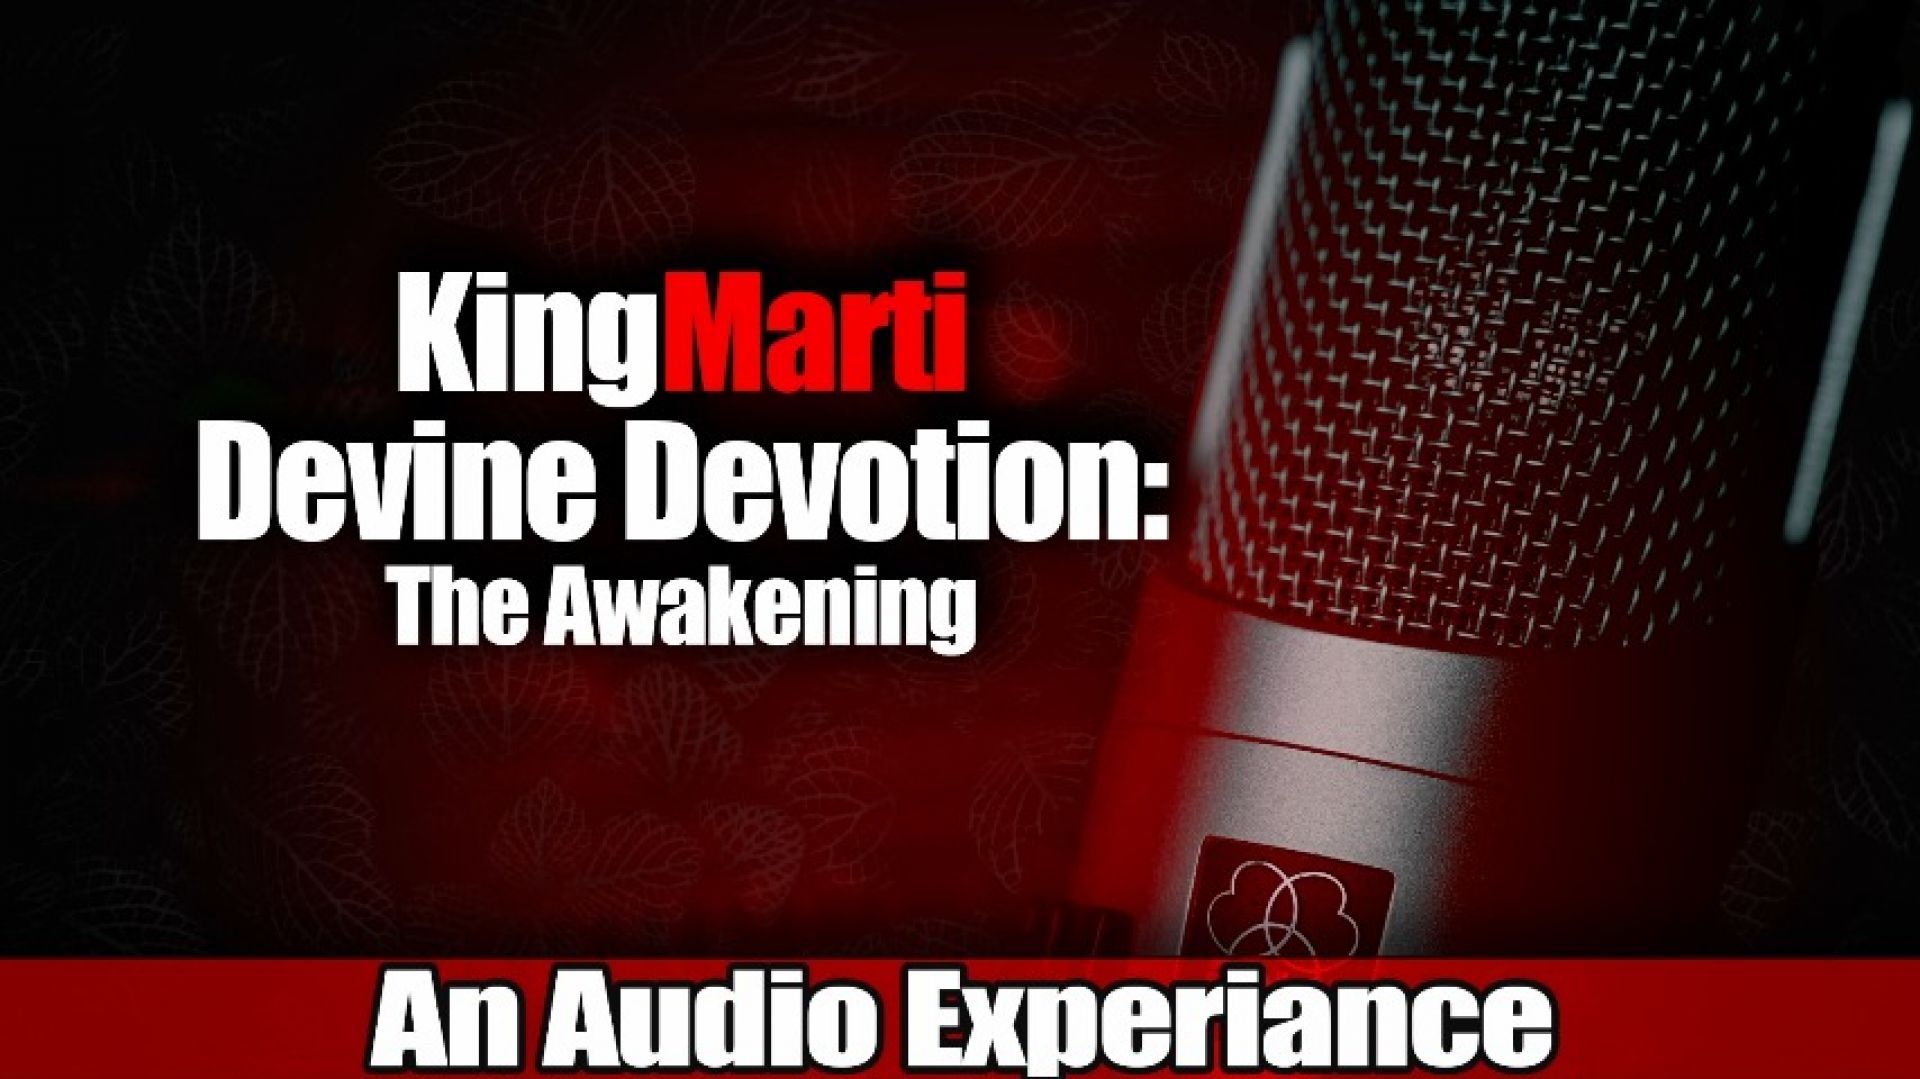 Divine Devotion: The Awakening